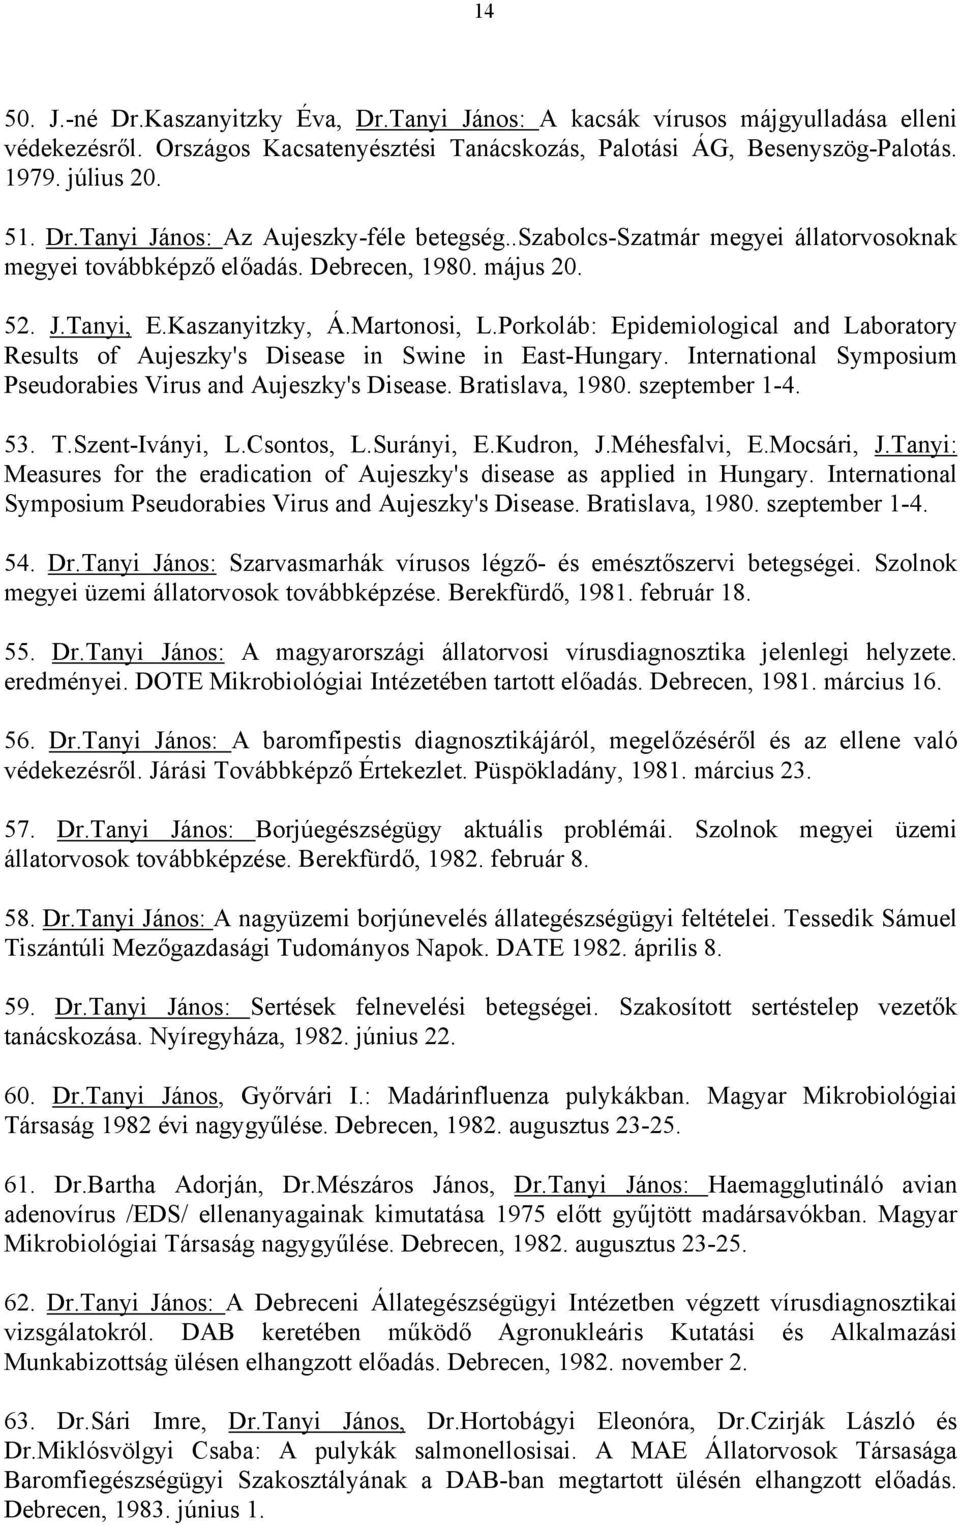 Porkoláb: Epidemiological and Laboratory Results of Aujeszky's Disease in Swine in East-Hungary. International Symposium Pseudorabies Virus and Aujeszky's Disease. Bratislava, 1980. szeptember 1-4.